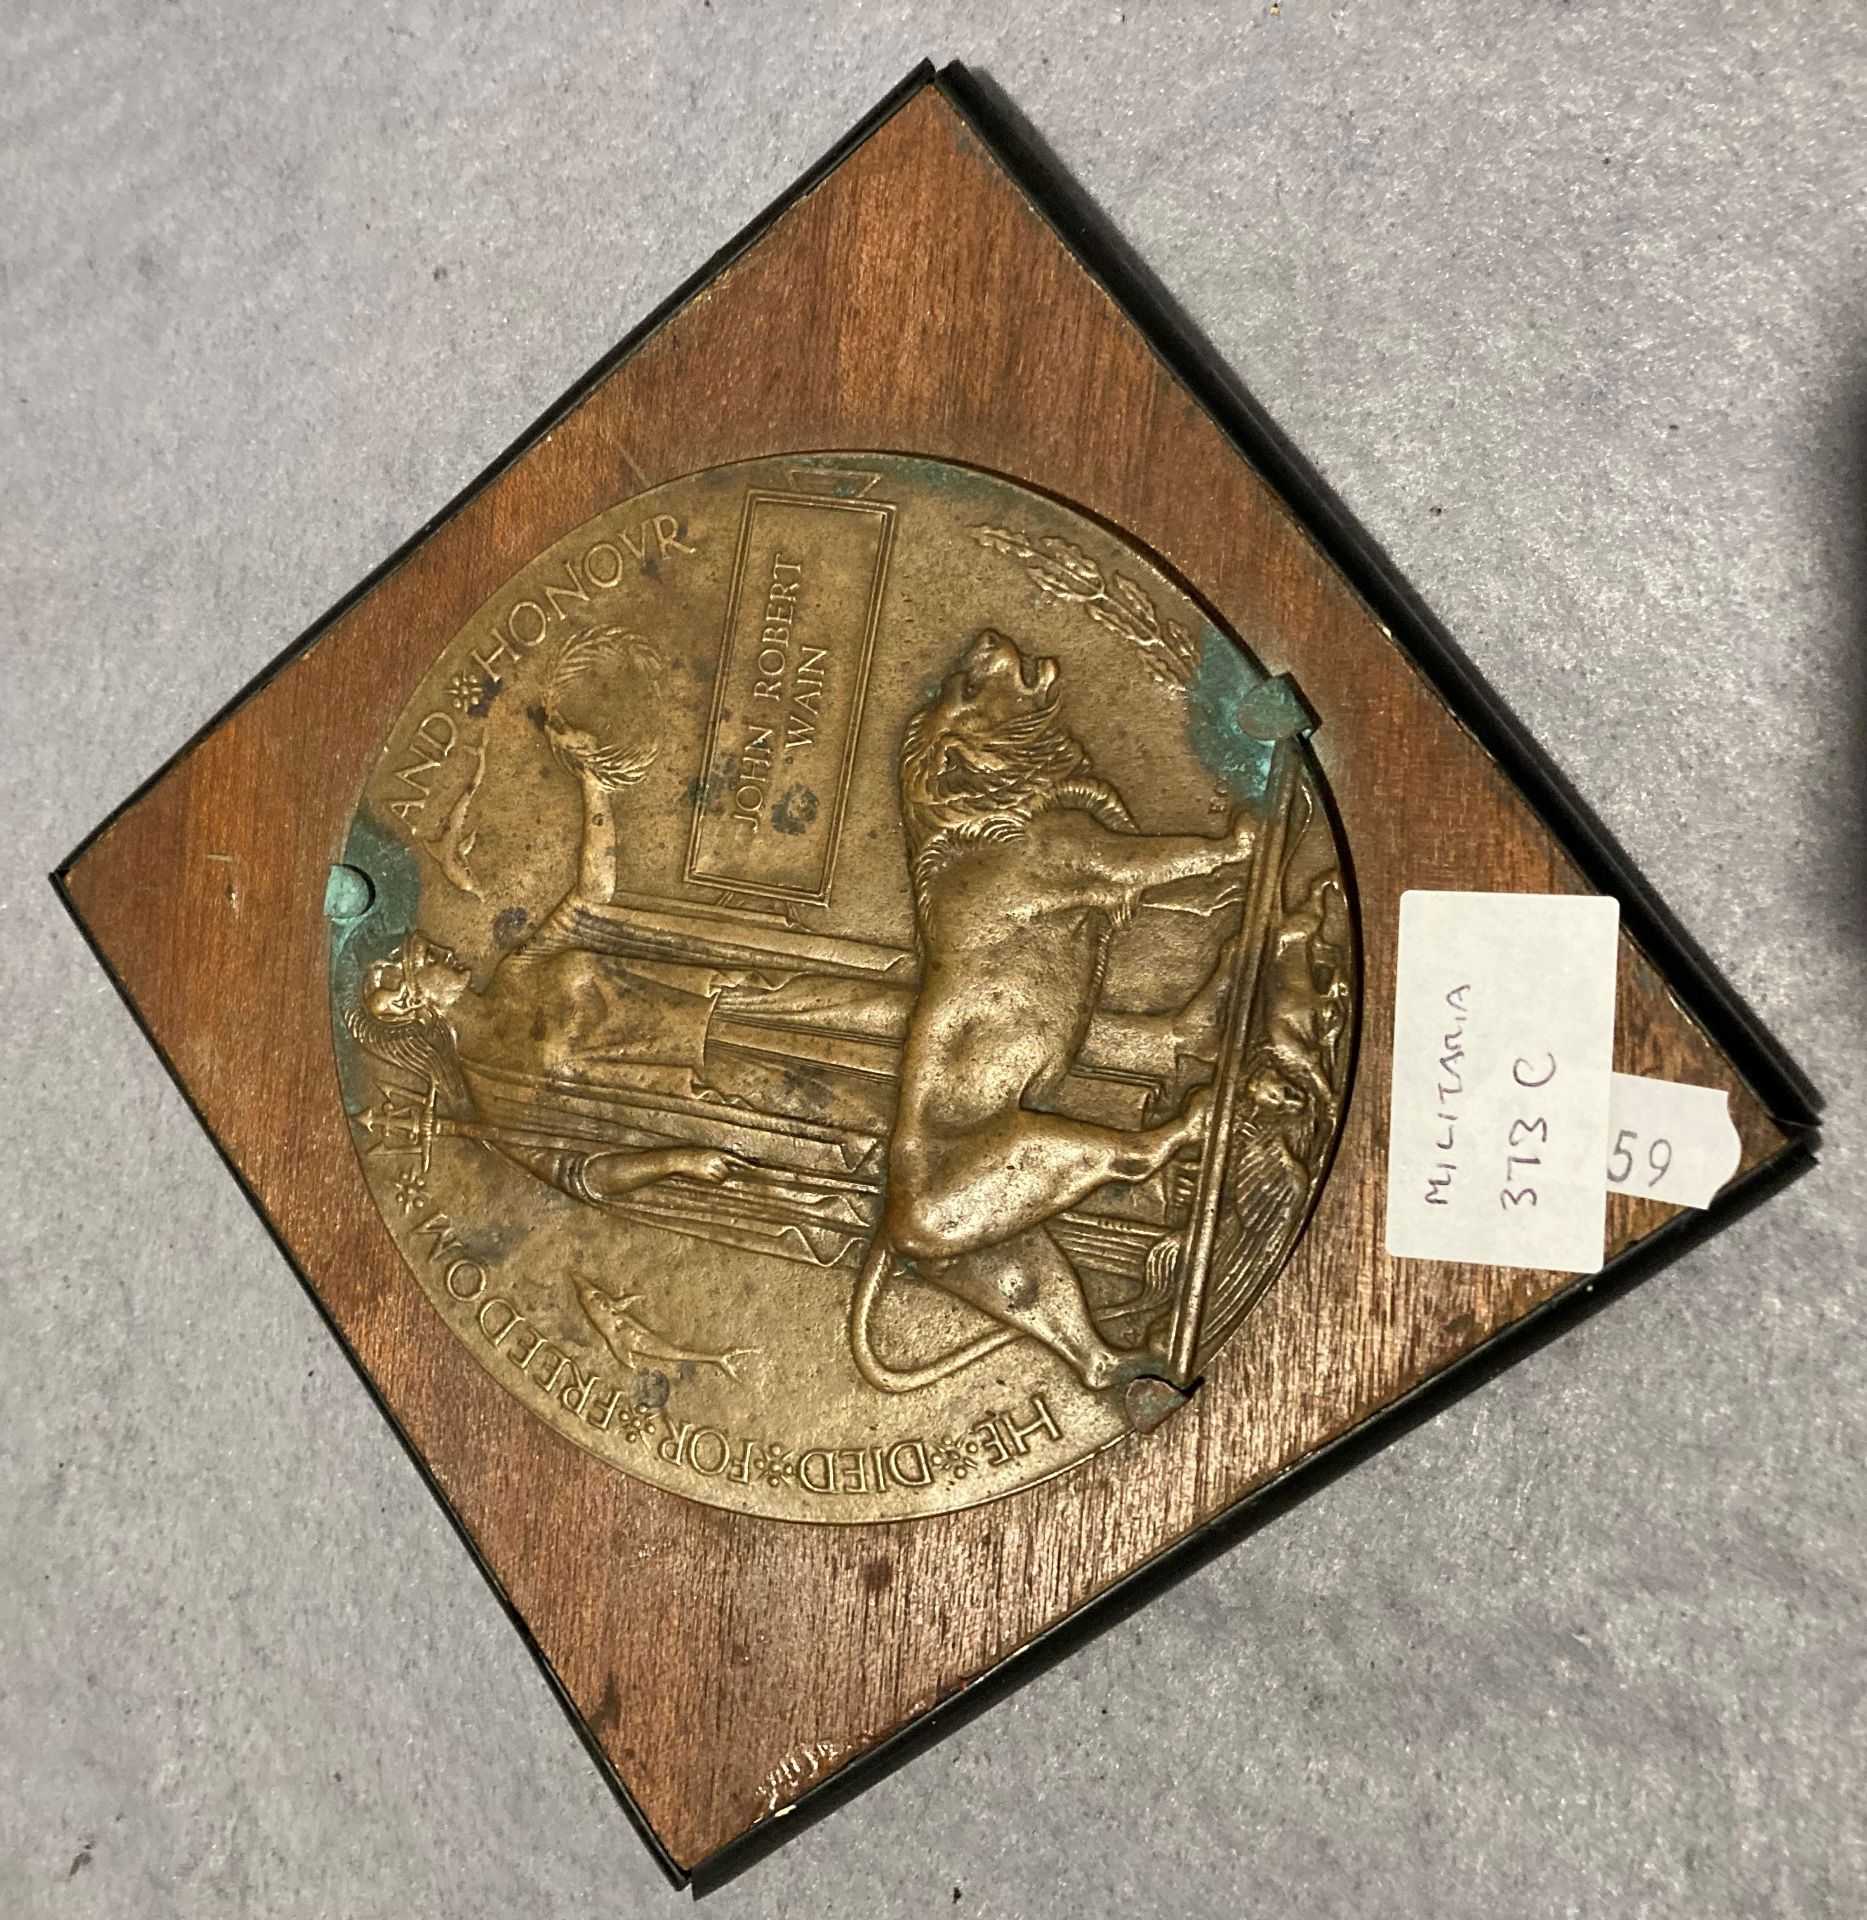 First World War memorial plaque to John Robert Wain mounted on a wood mount (Saleroom location: S2